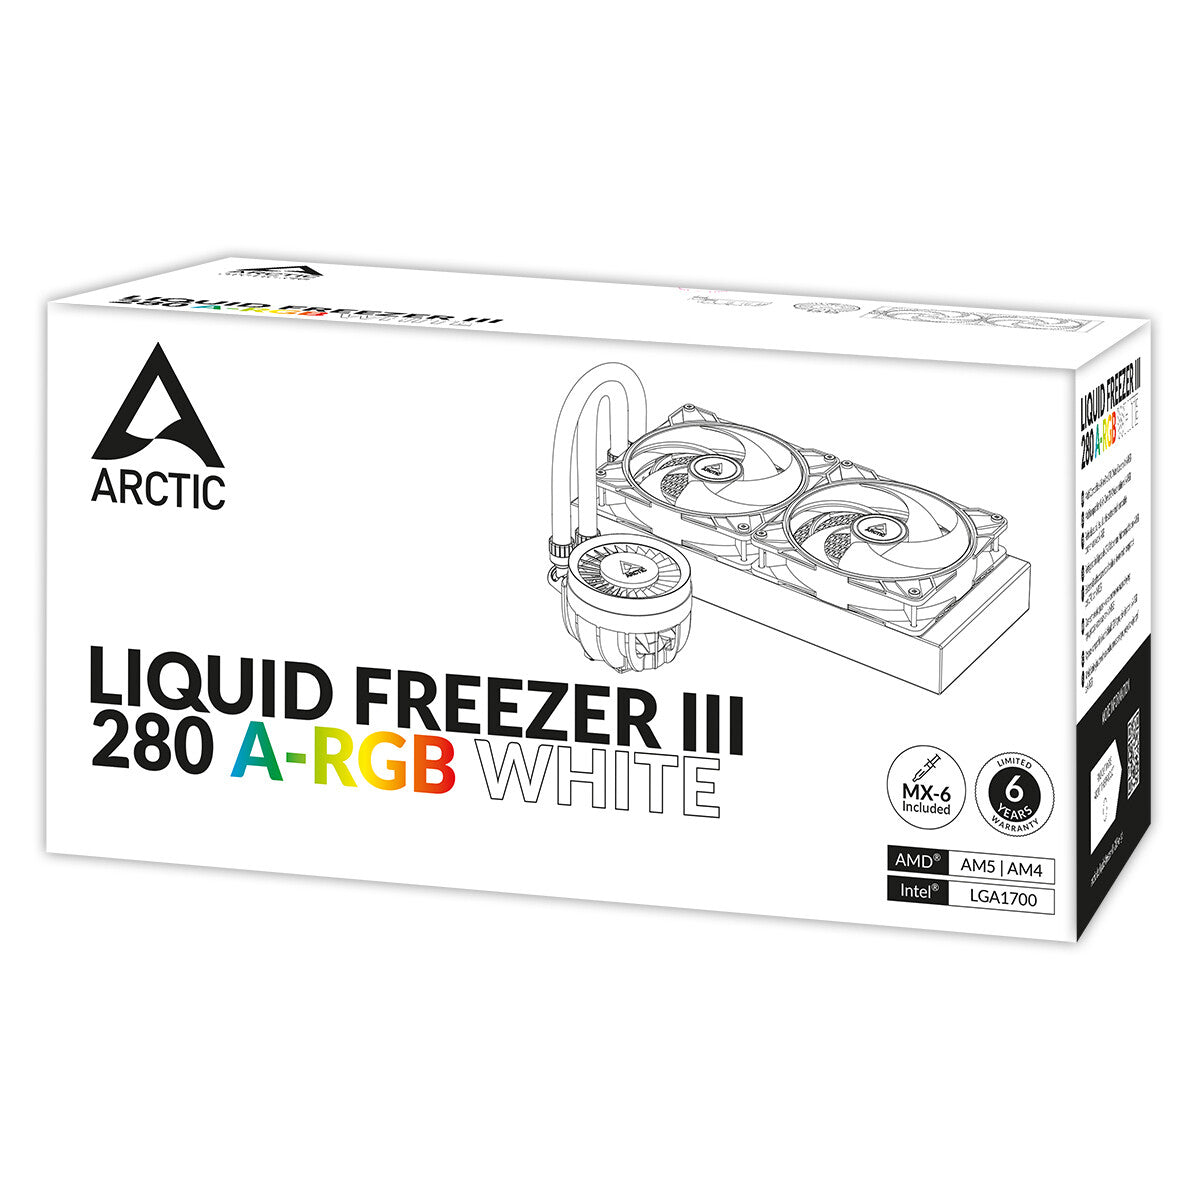 ARCTIC Liquid Freezer III 280 A-RGB - All-in-one Liquid CPU Cooler in White - 280mm